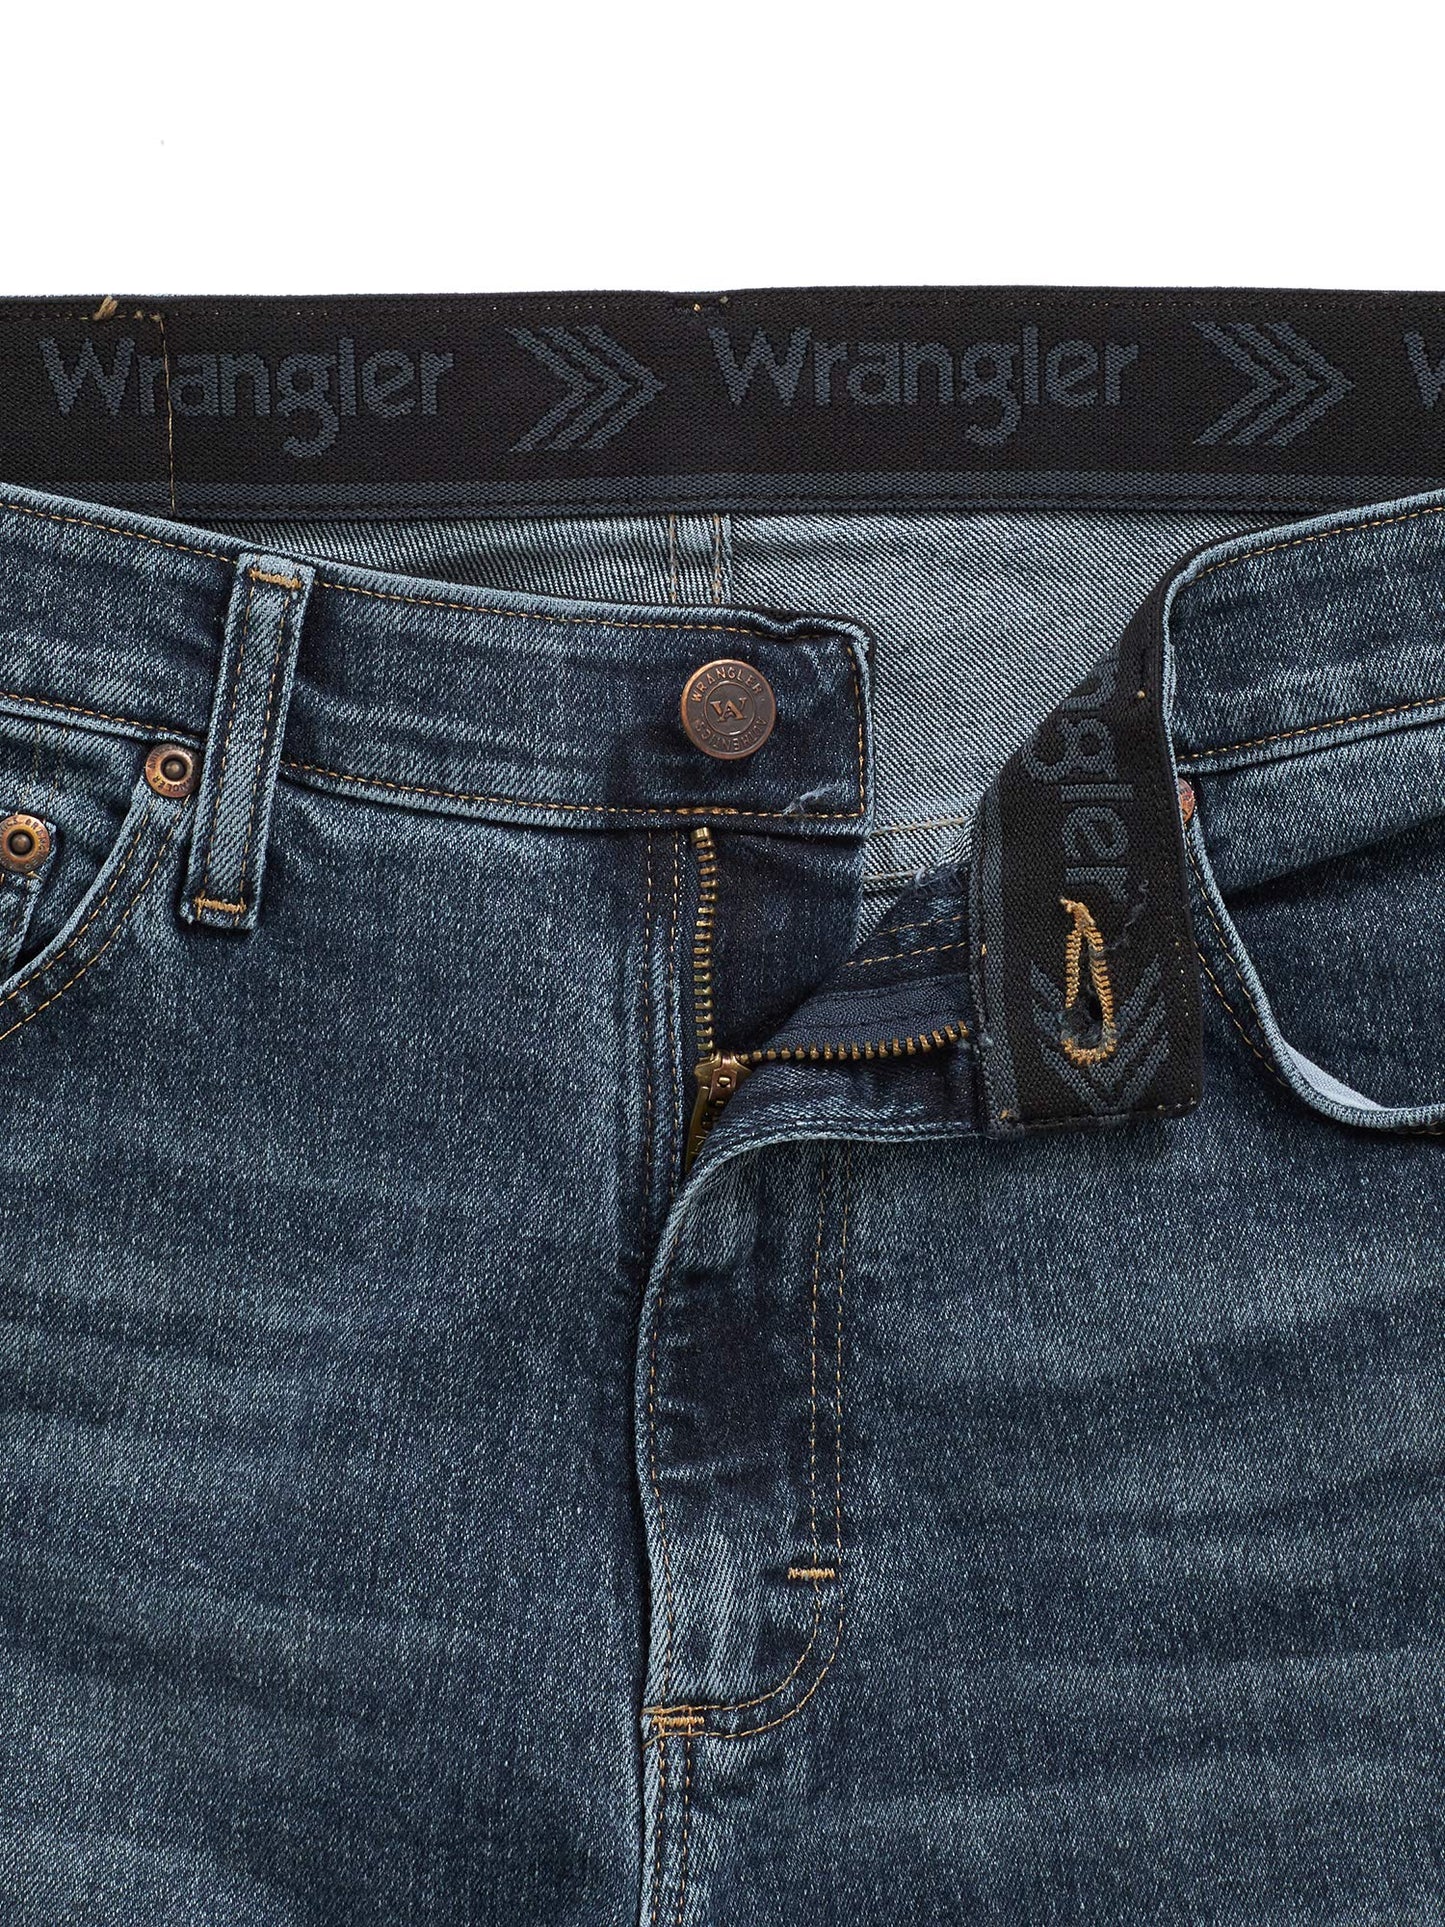 Wrangler Authentics Men's Comfort Flex Waist Relaxed Fit Jean, Smoke, 32W X 30L